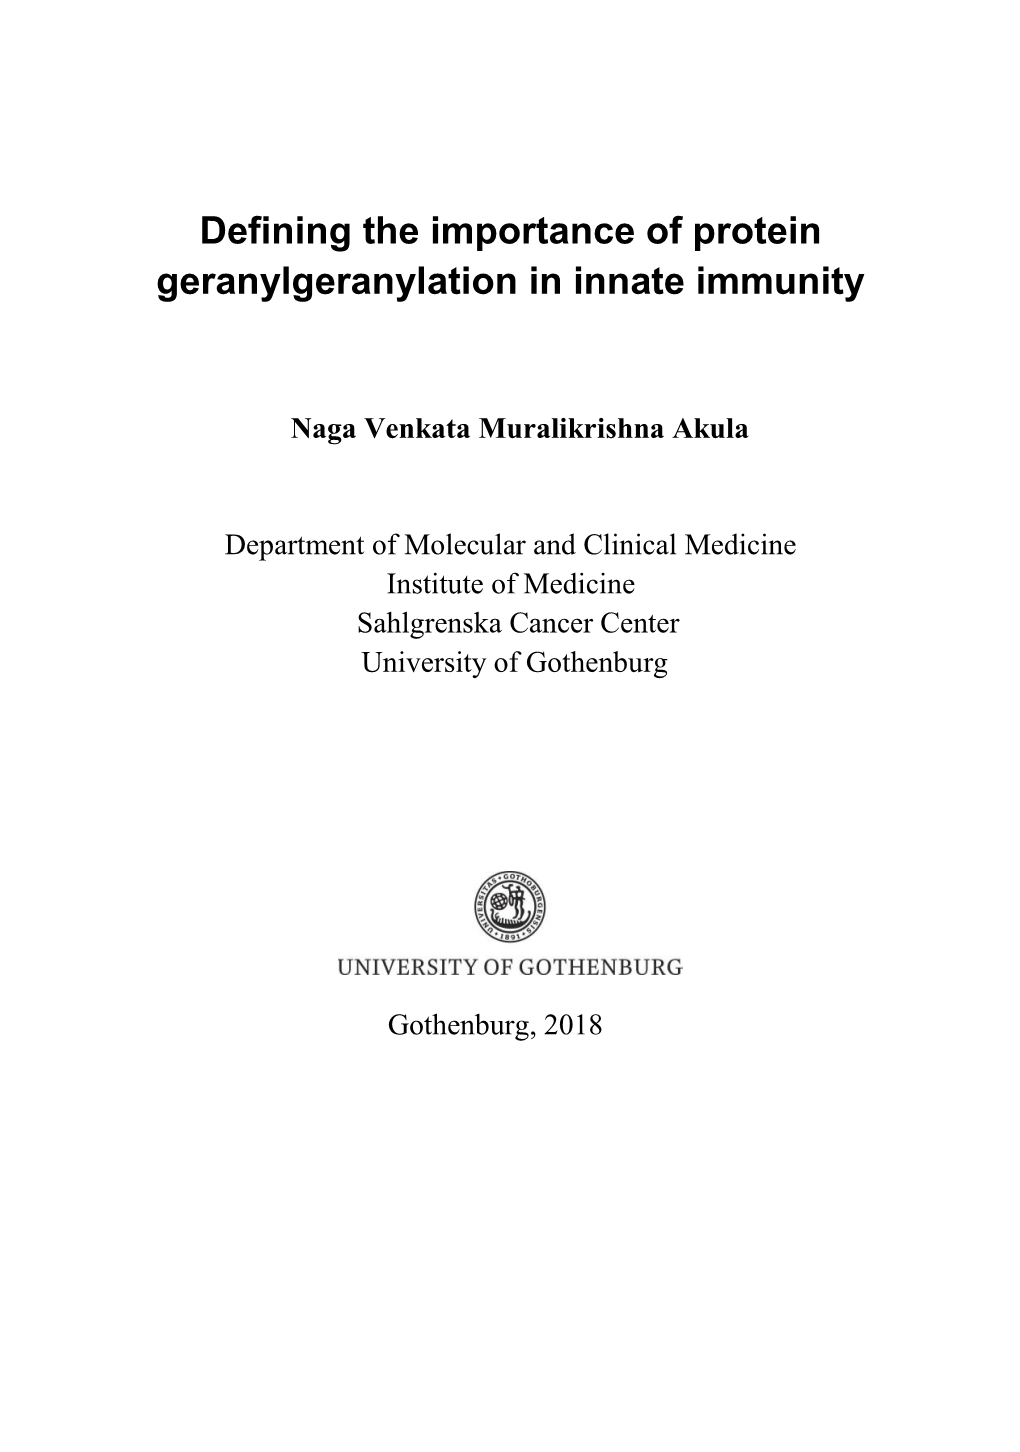 Defining the Importance of Protein Geranylgeranylation in Innate Immunity